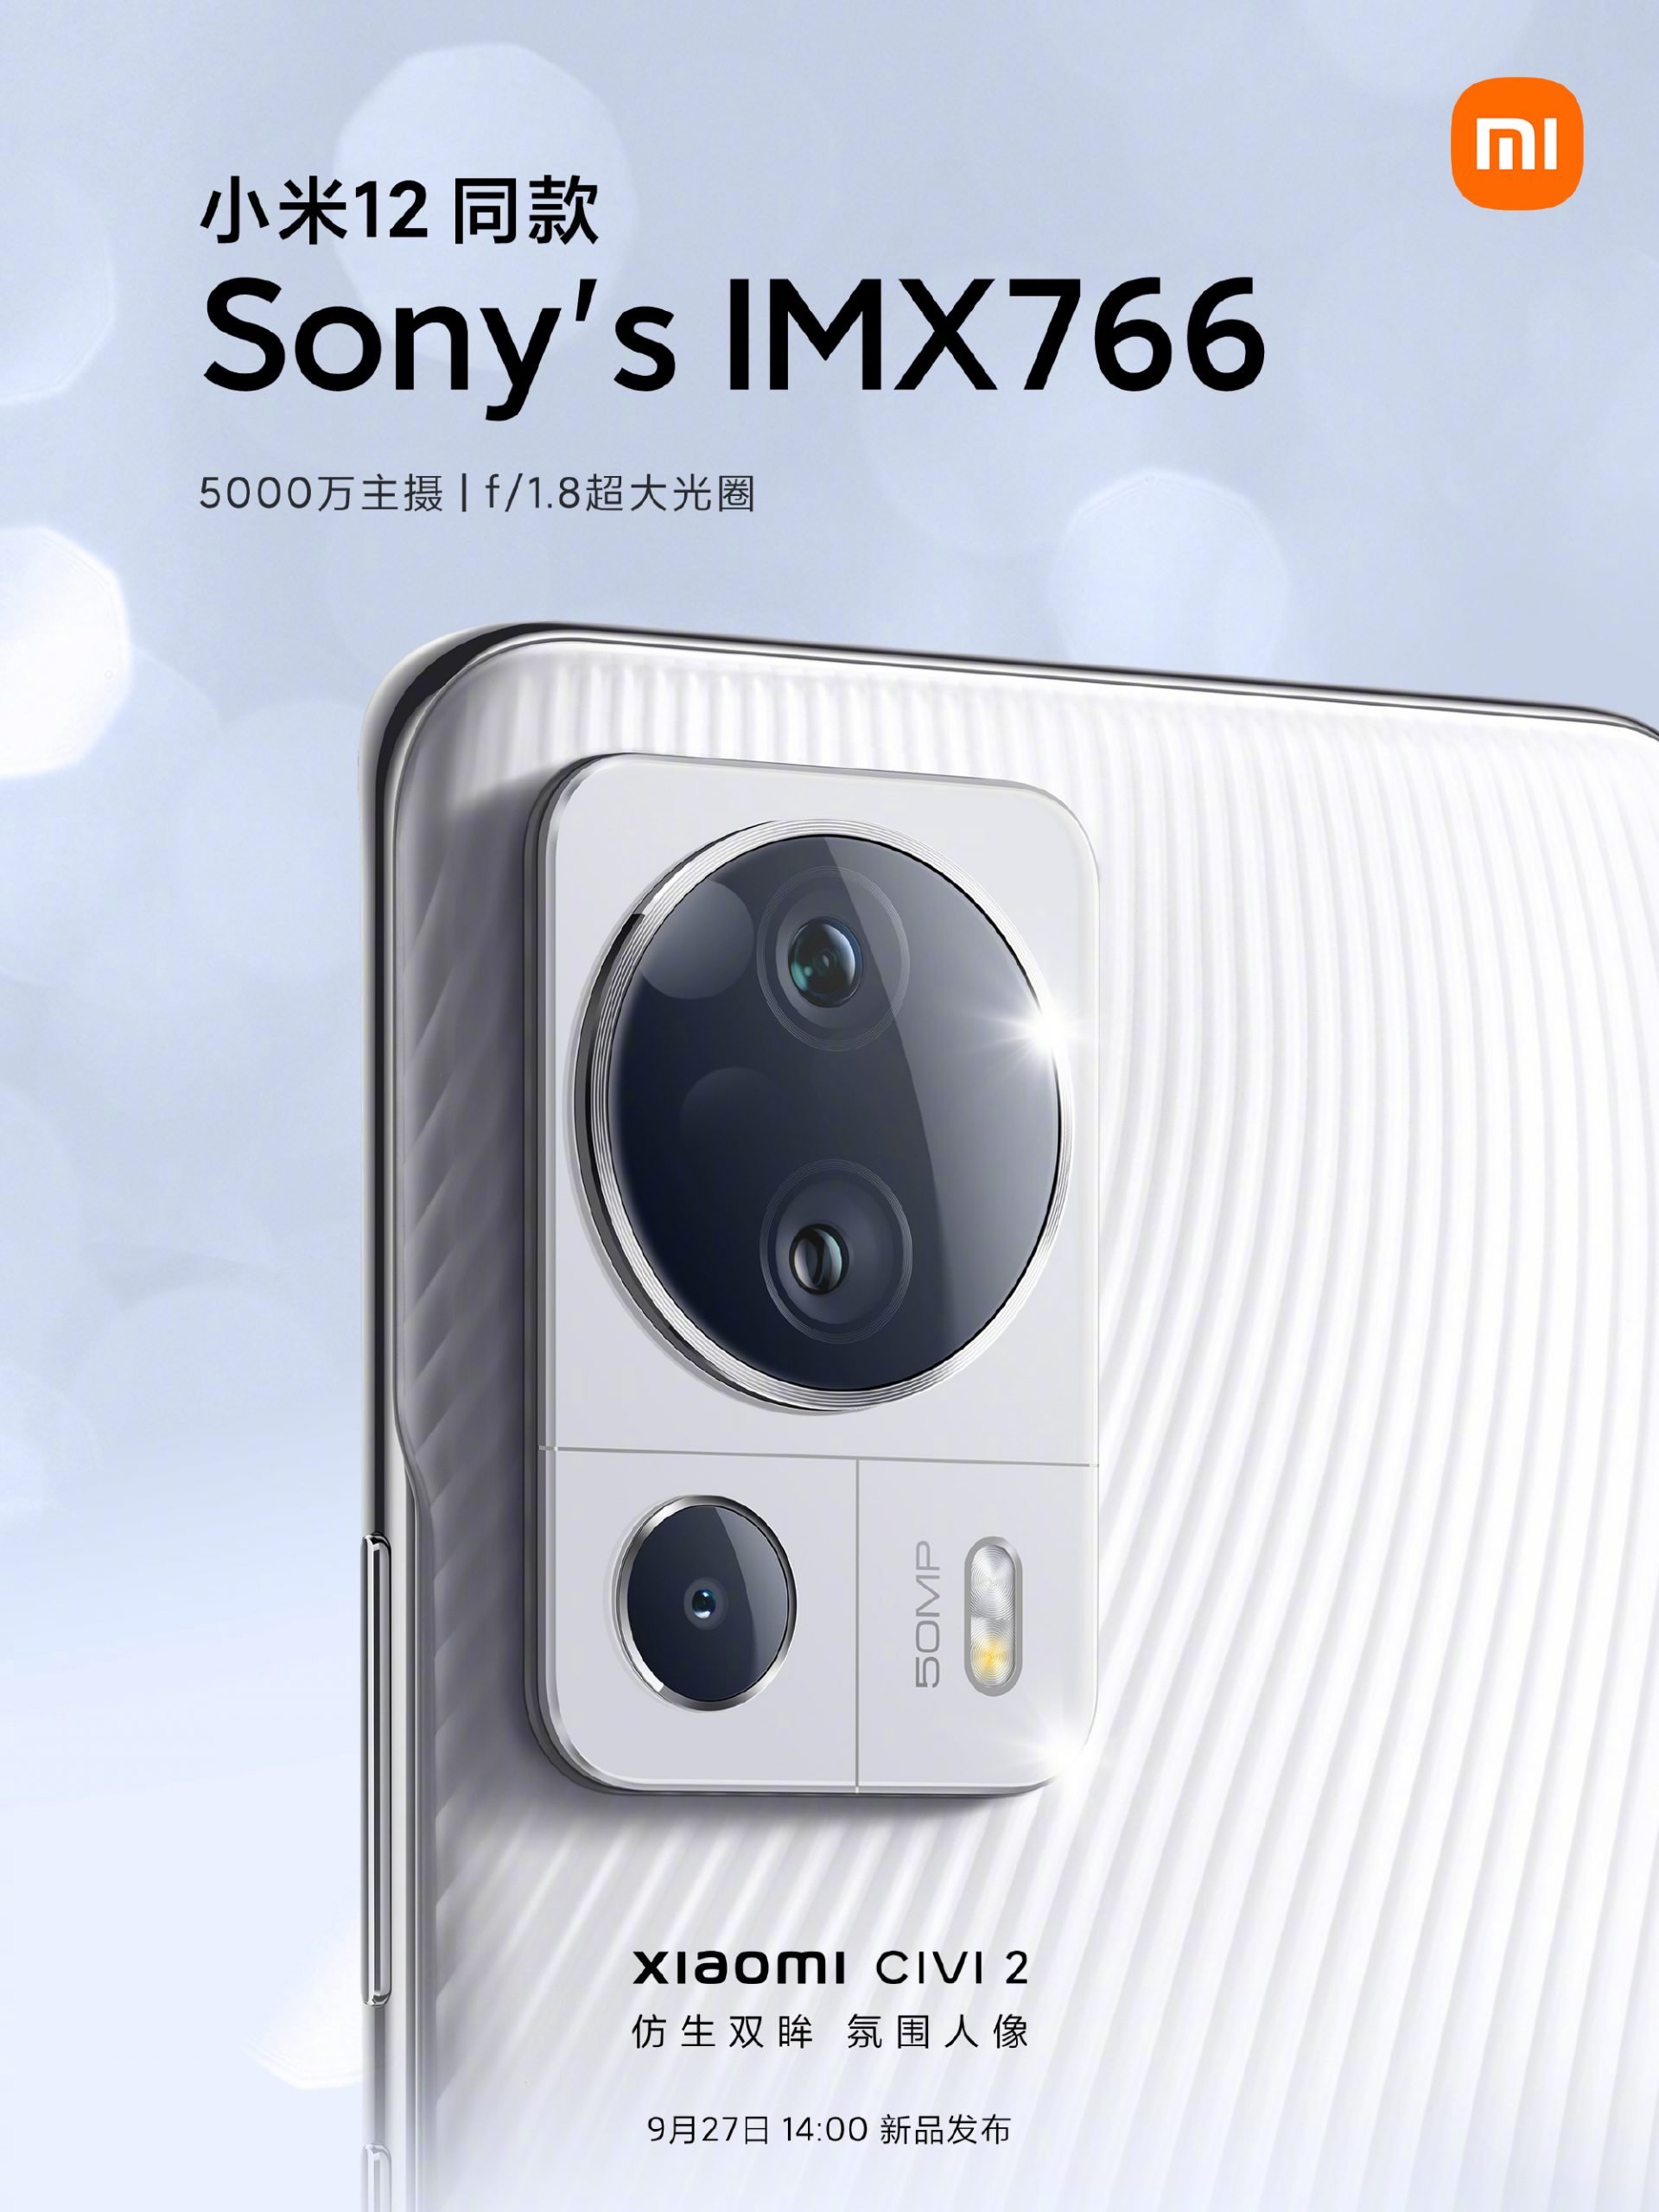 Cámara Xiaomi CIVI 2 Sony IMX766